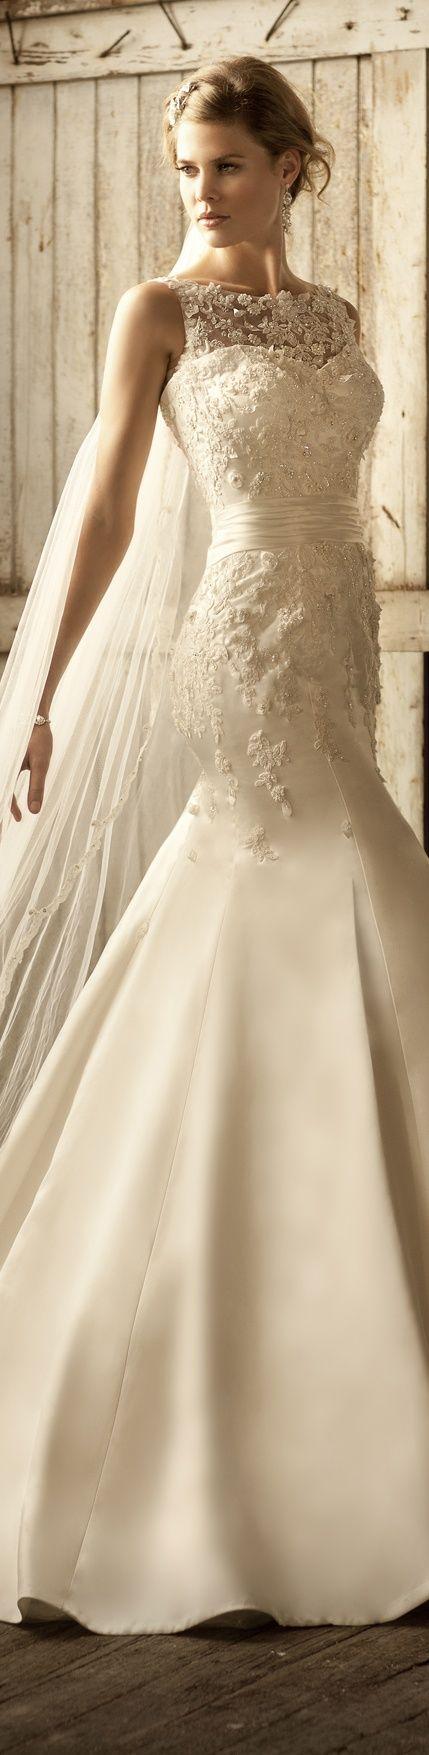 زفاف - Best Beautiful Wedding Dresses For 2015